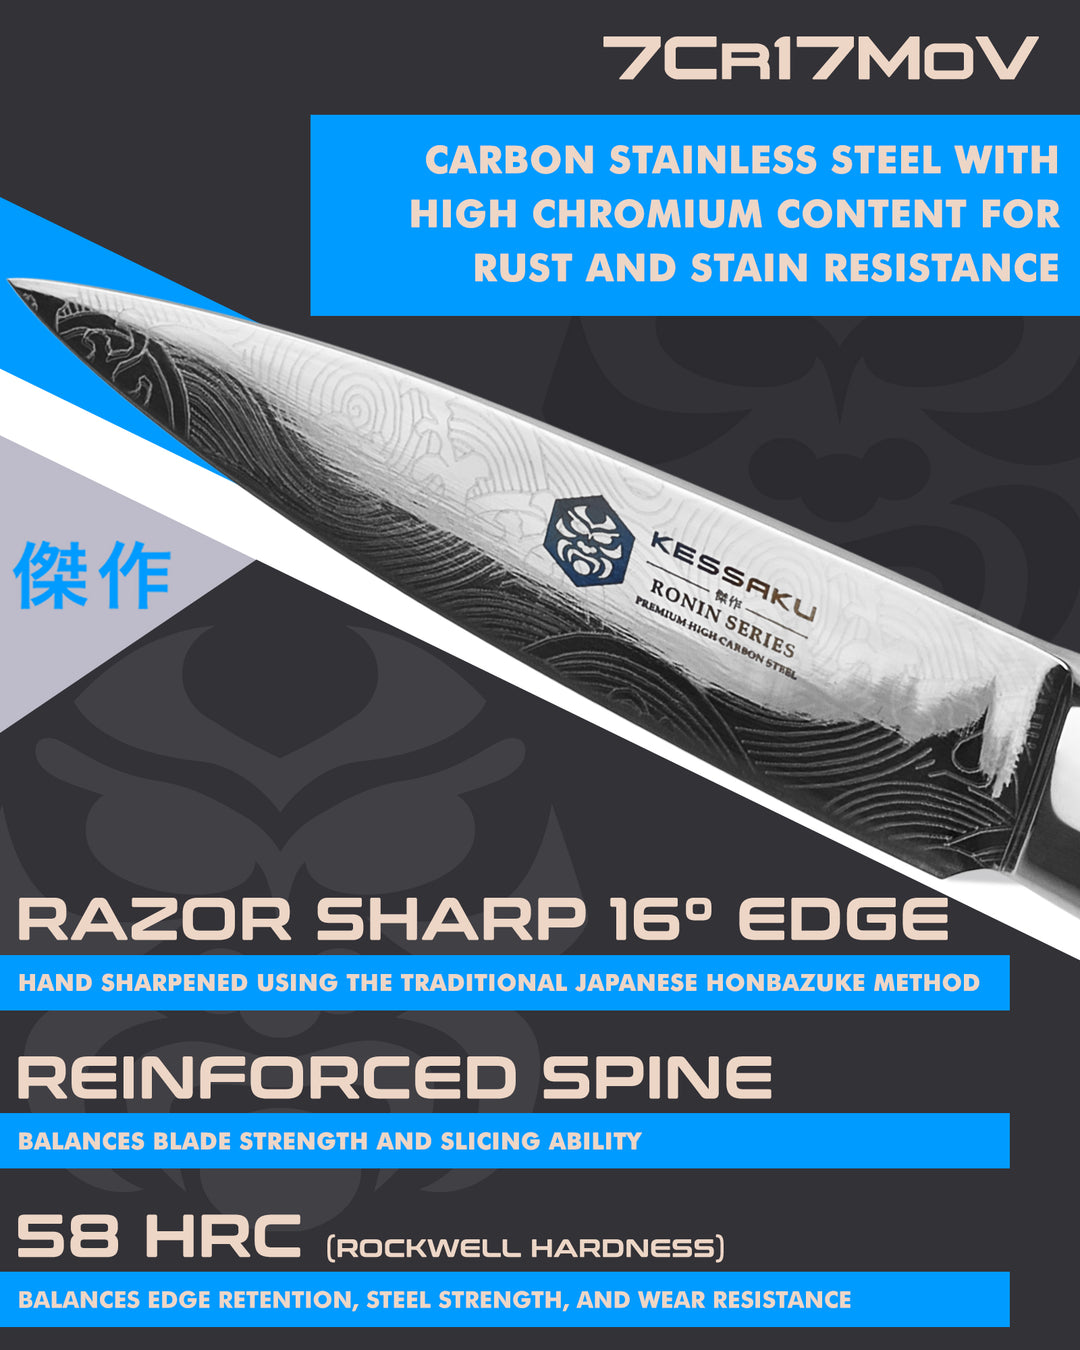 Kessaku Ronin Paring Knife blade features: 7Cr17MoV steel, 58 HRC, 16 degree edge, reinforced spine